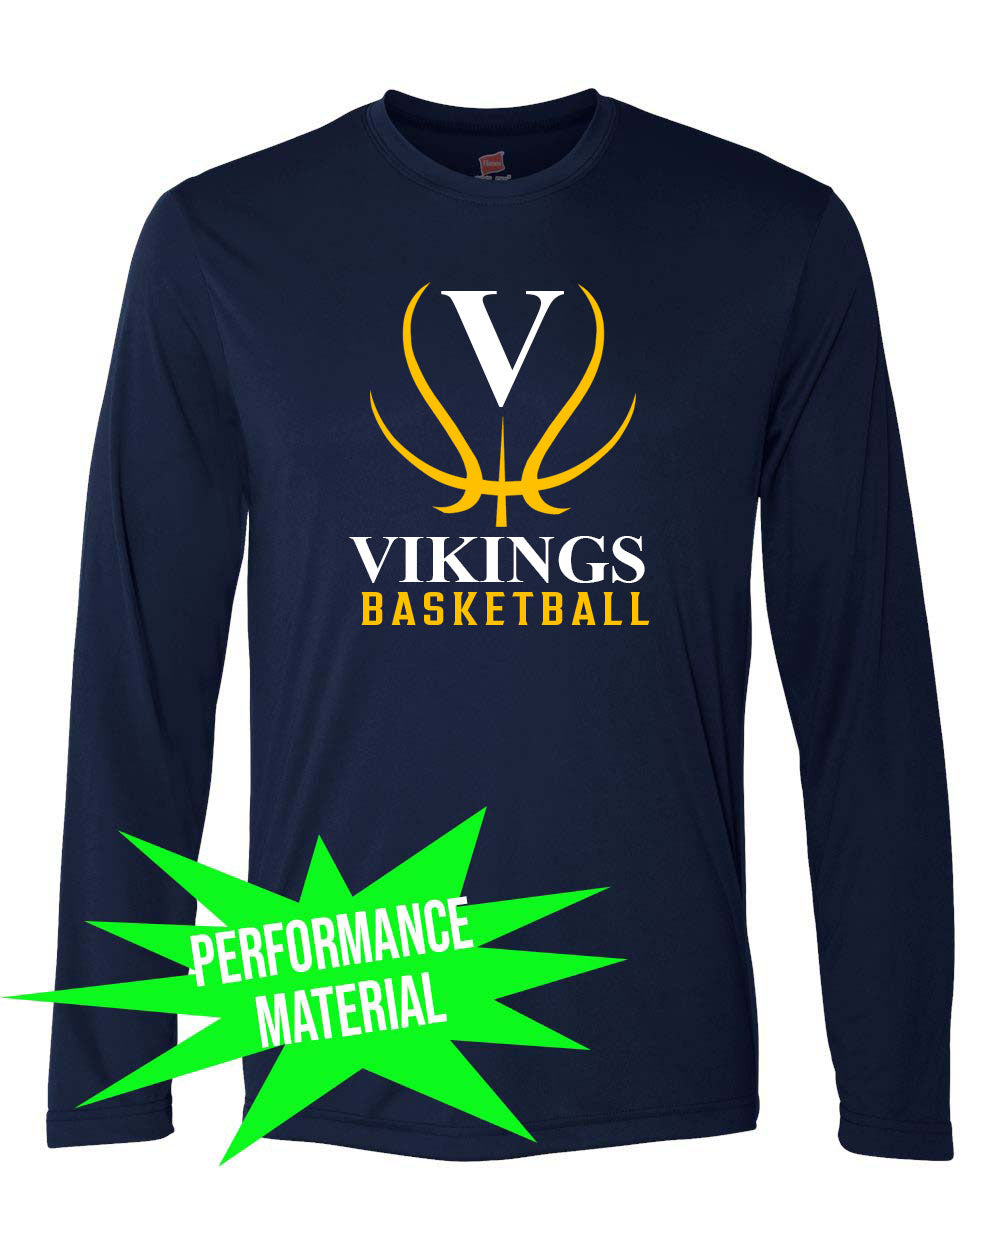 Vikings Basketball Performance Material Design 3 Long Sleeve Shirt